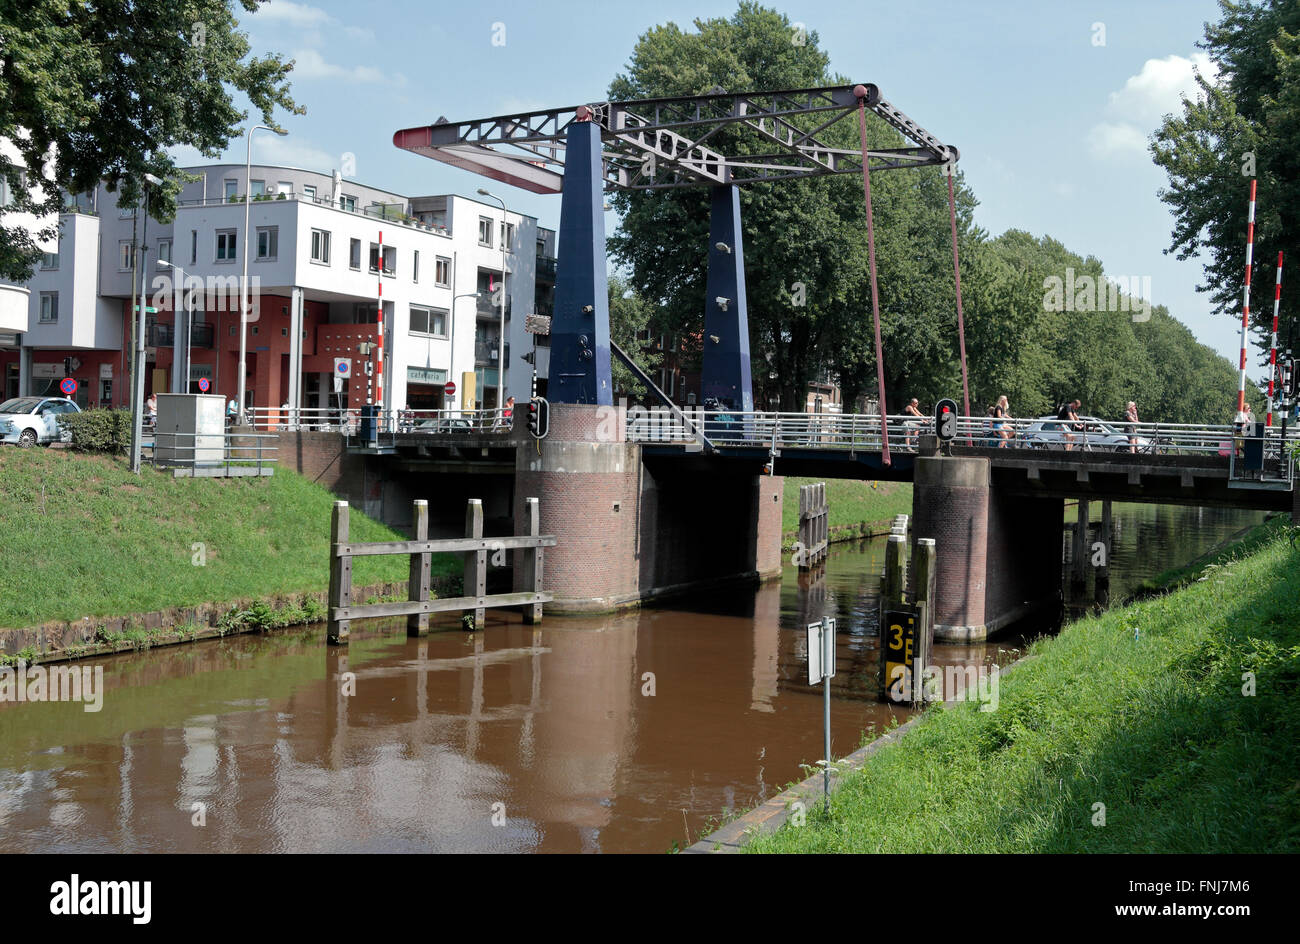 A single road bascule bridge over a canal in Den Bosch, Netherlands. Stock Photo